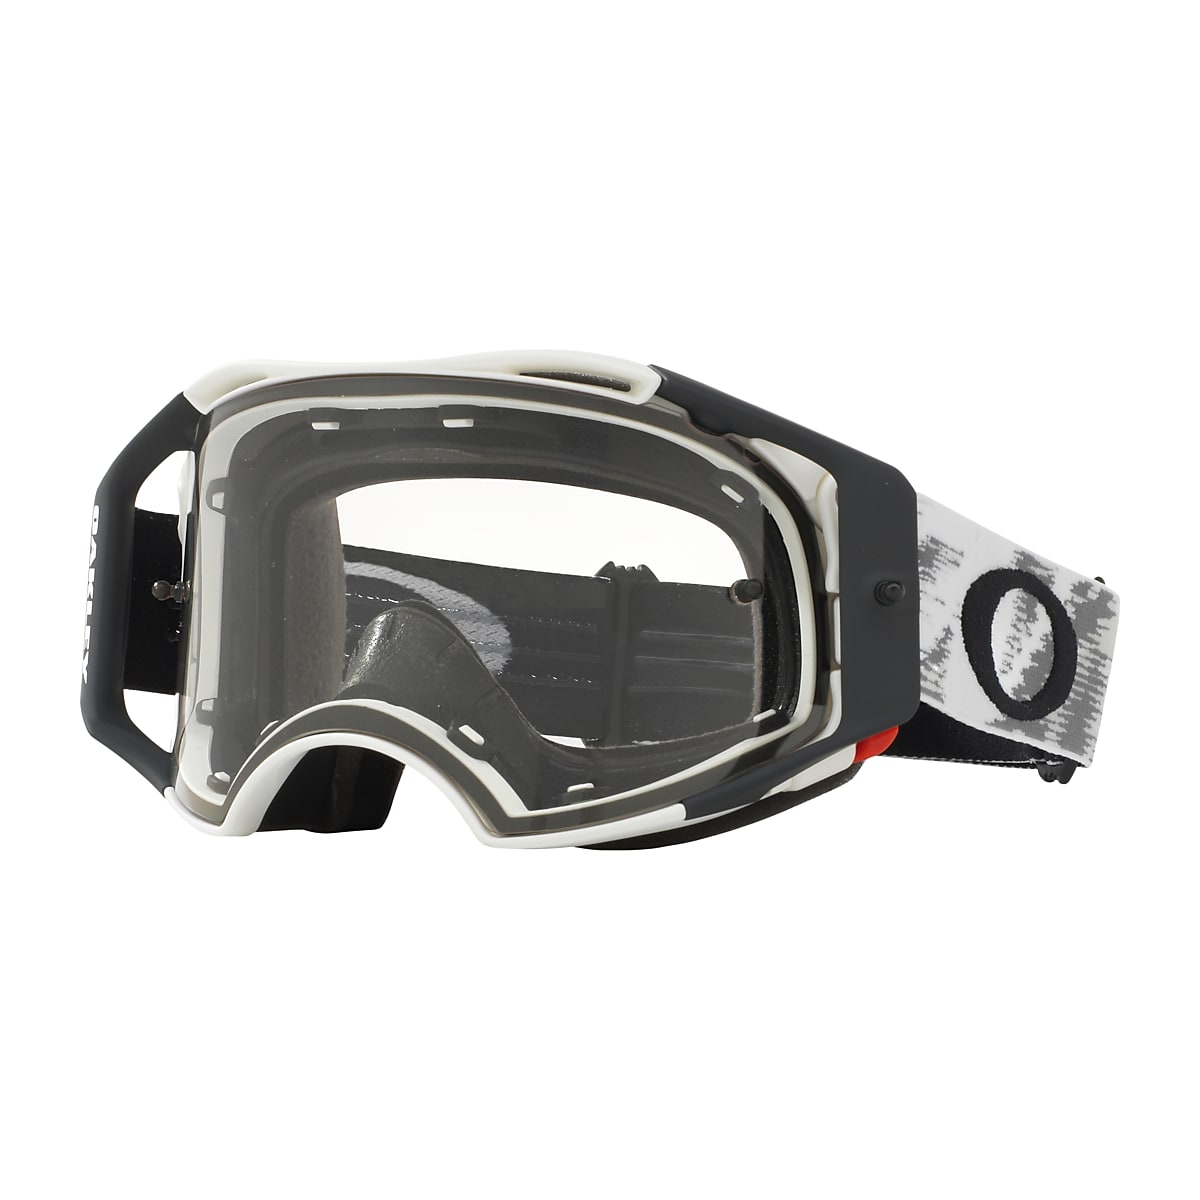 Oakley Airbrake® MX Goggles - Jet Black - Prizm MX Bronze - OO7046-46 |  Oakley US Store